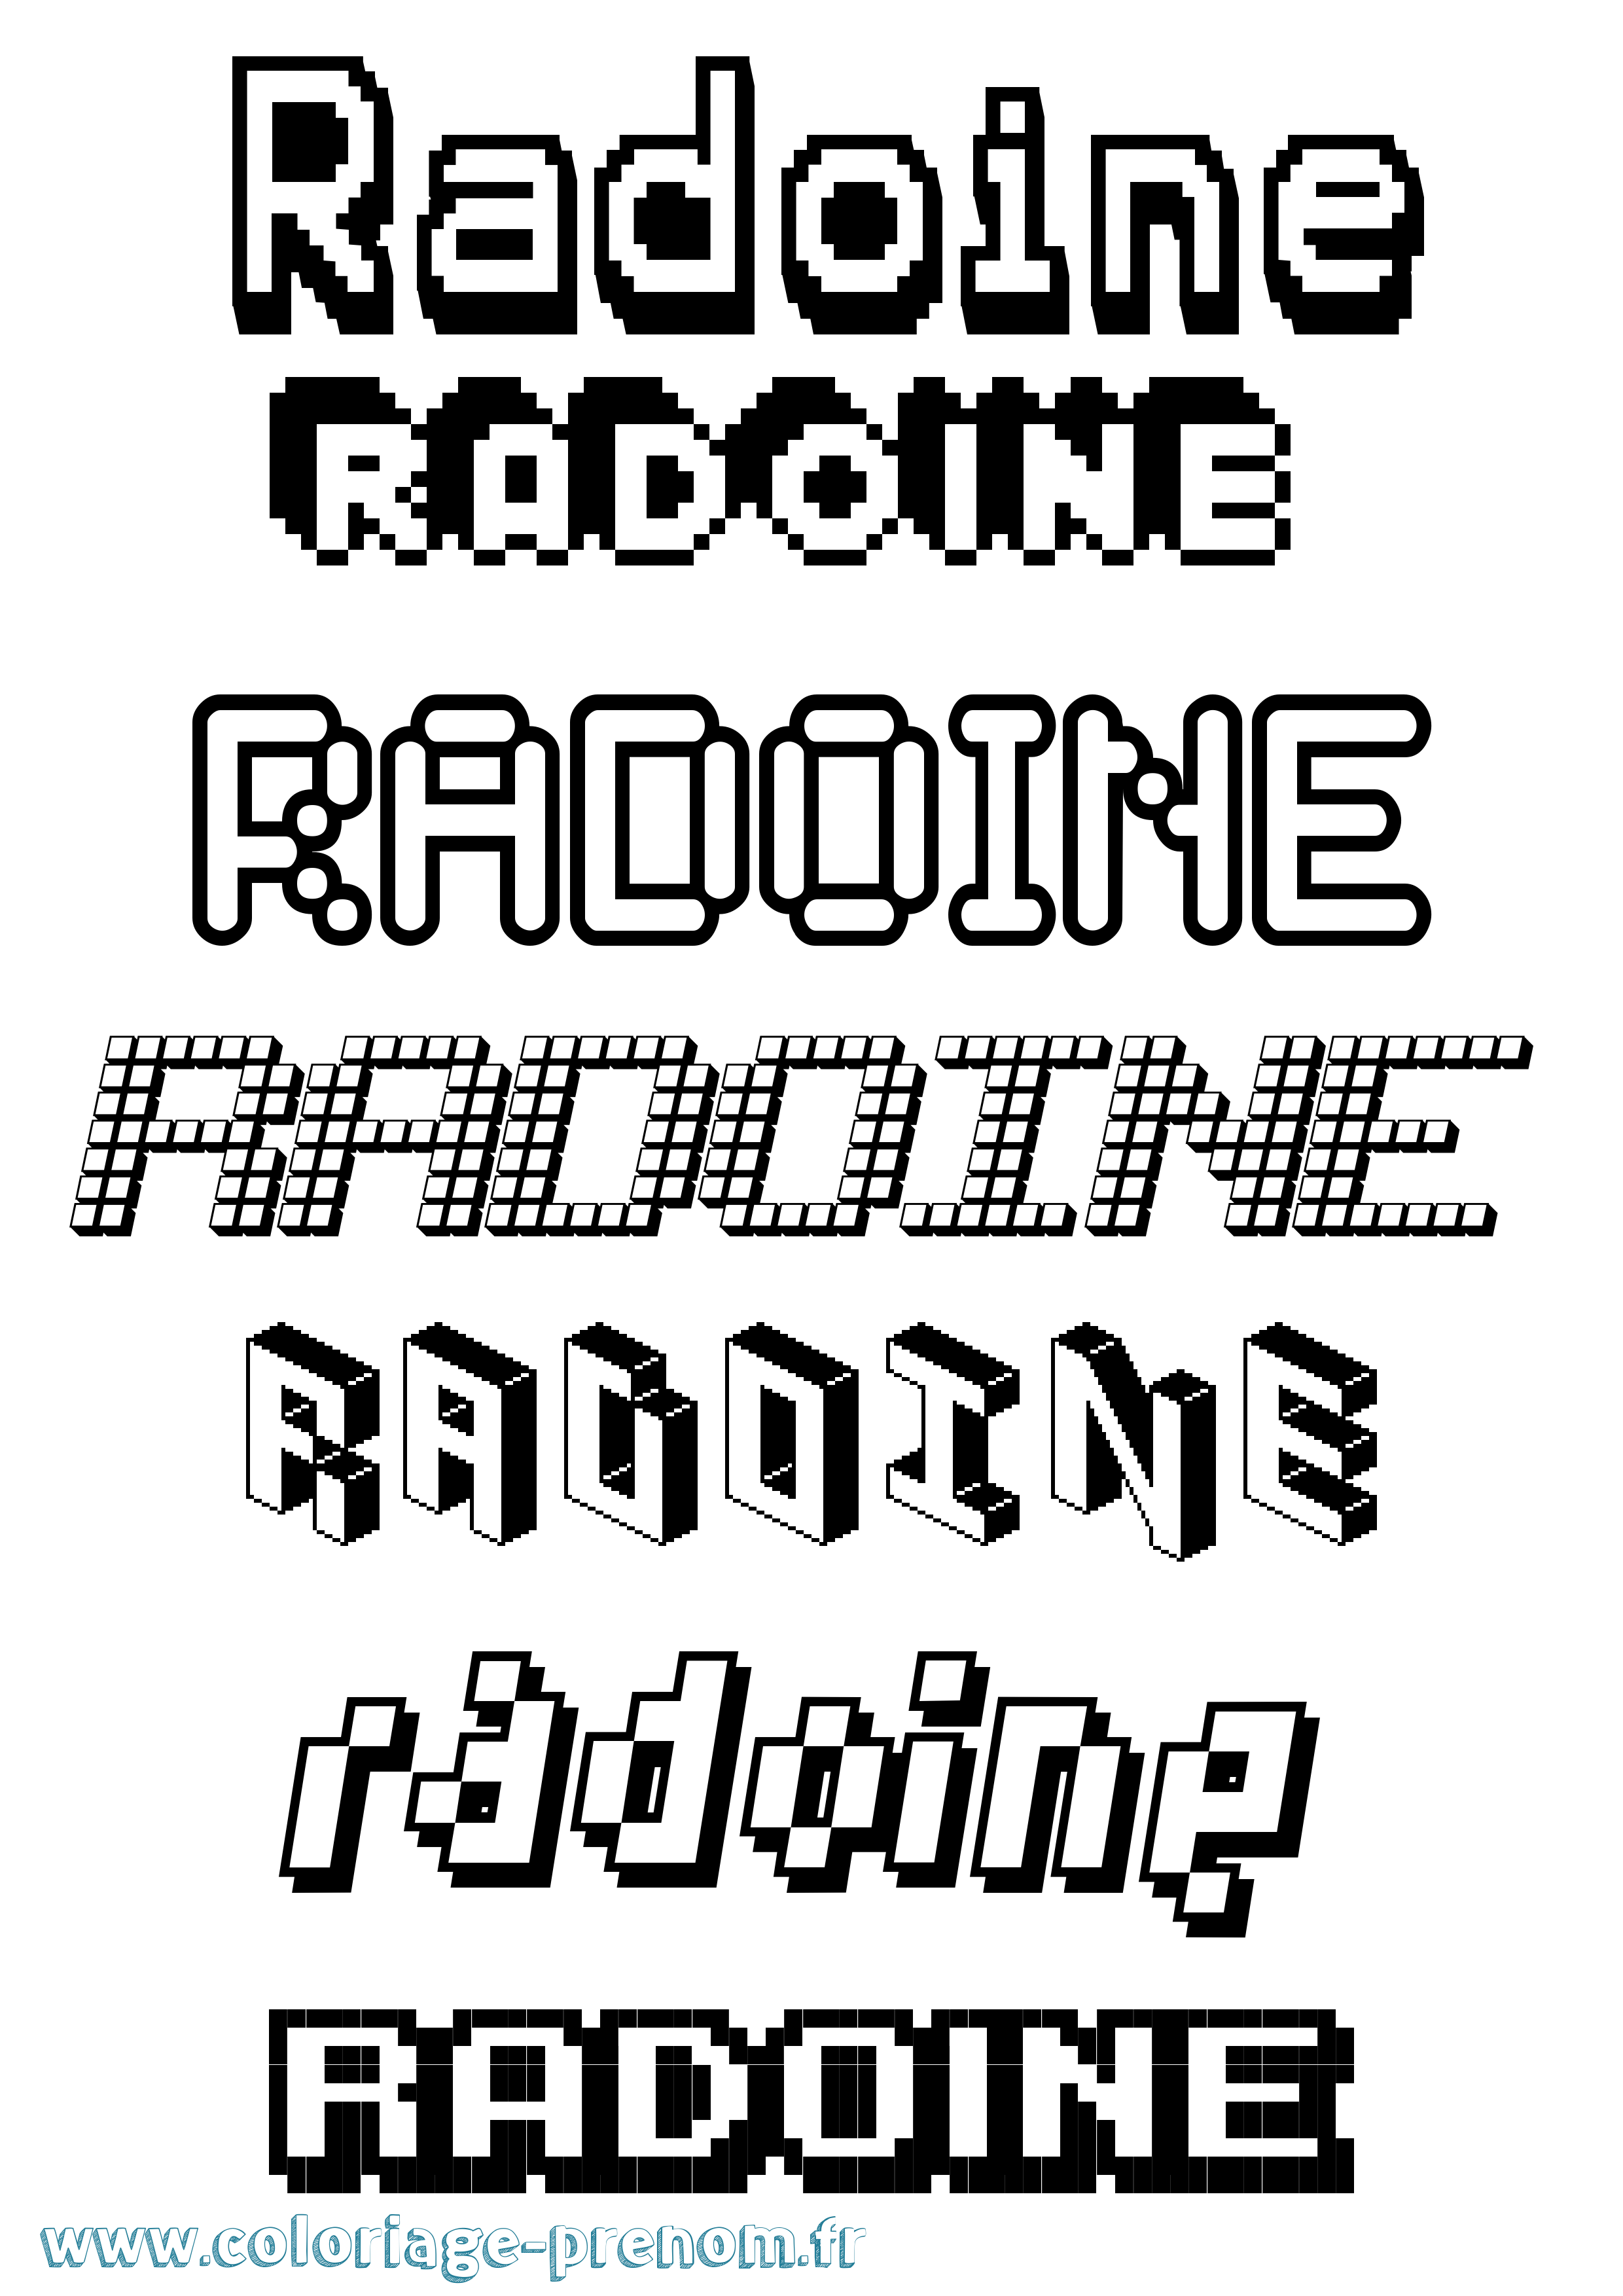 Coloriage prénom Radoine Pixel